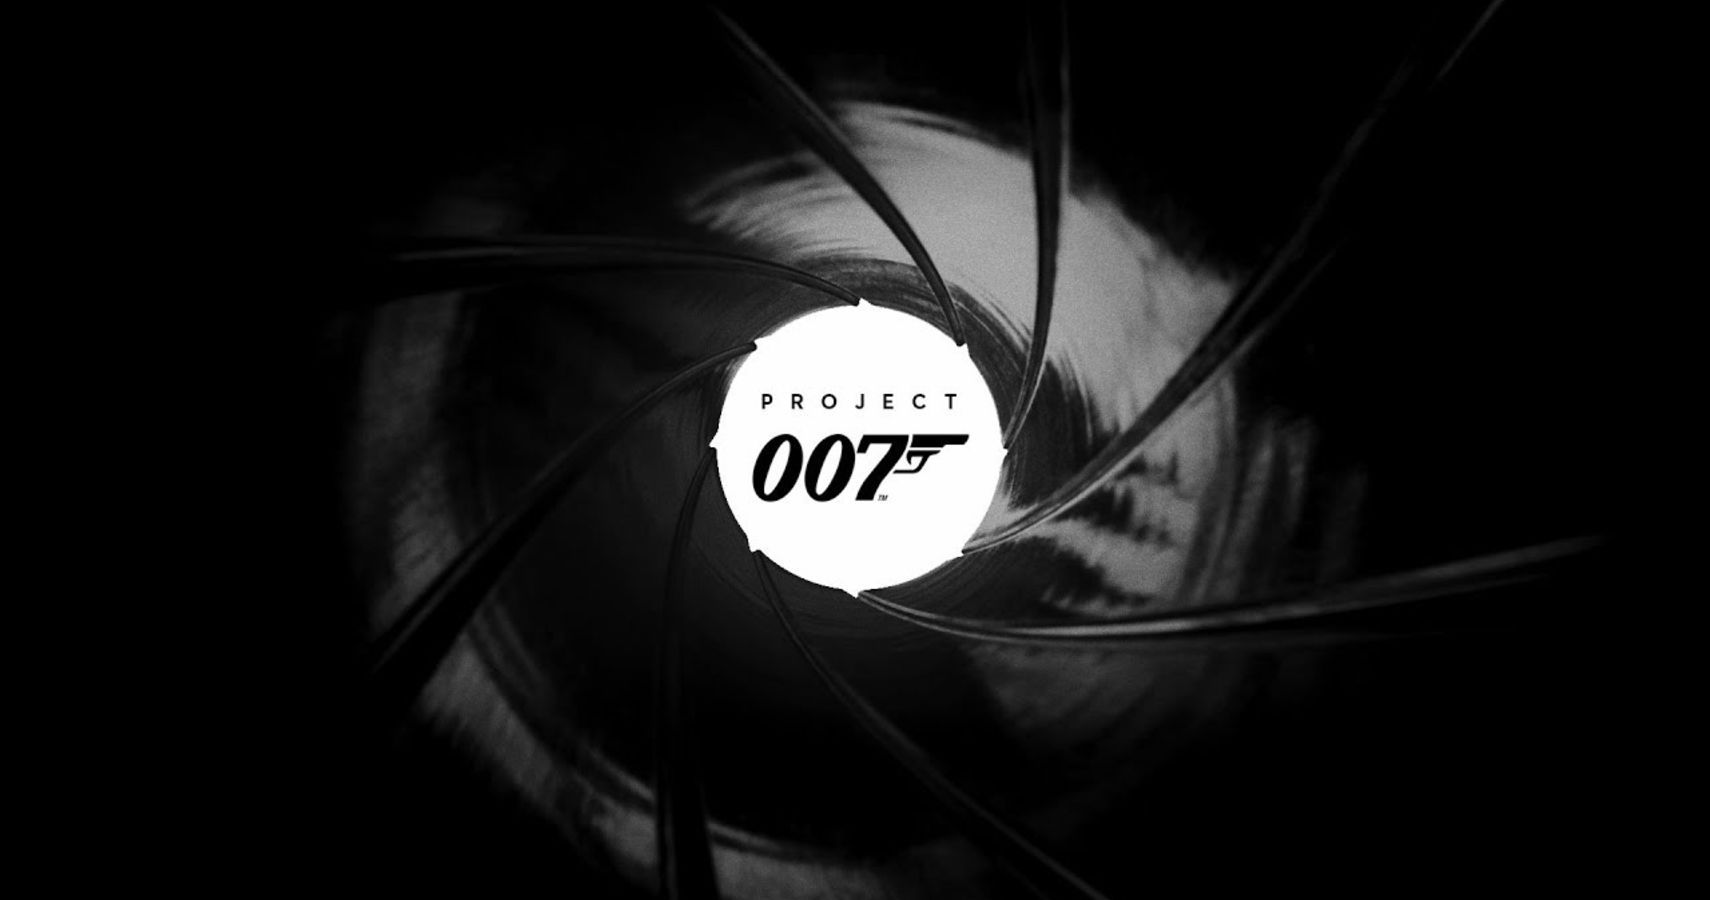 Hitman 3 Team “Hopes That The Bond Team Will Be Inspired”